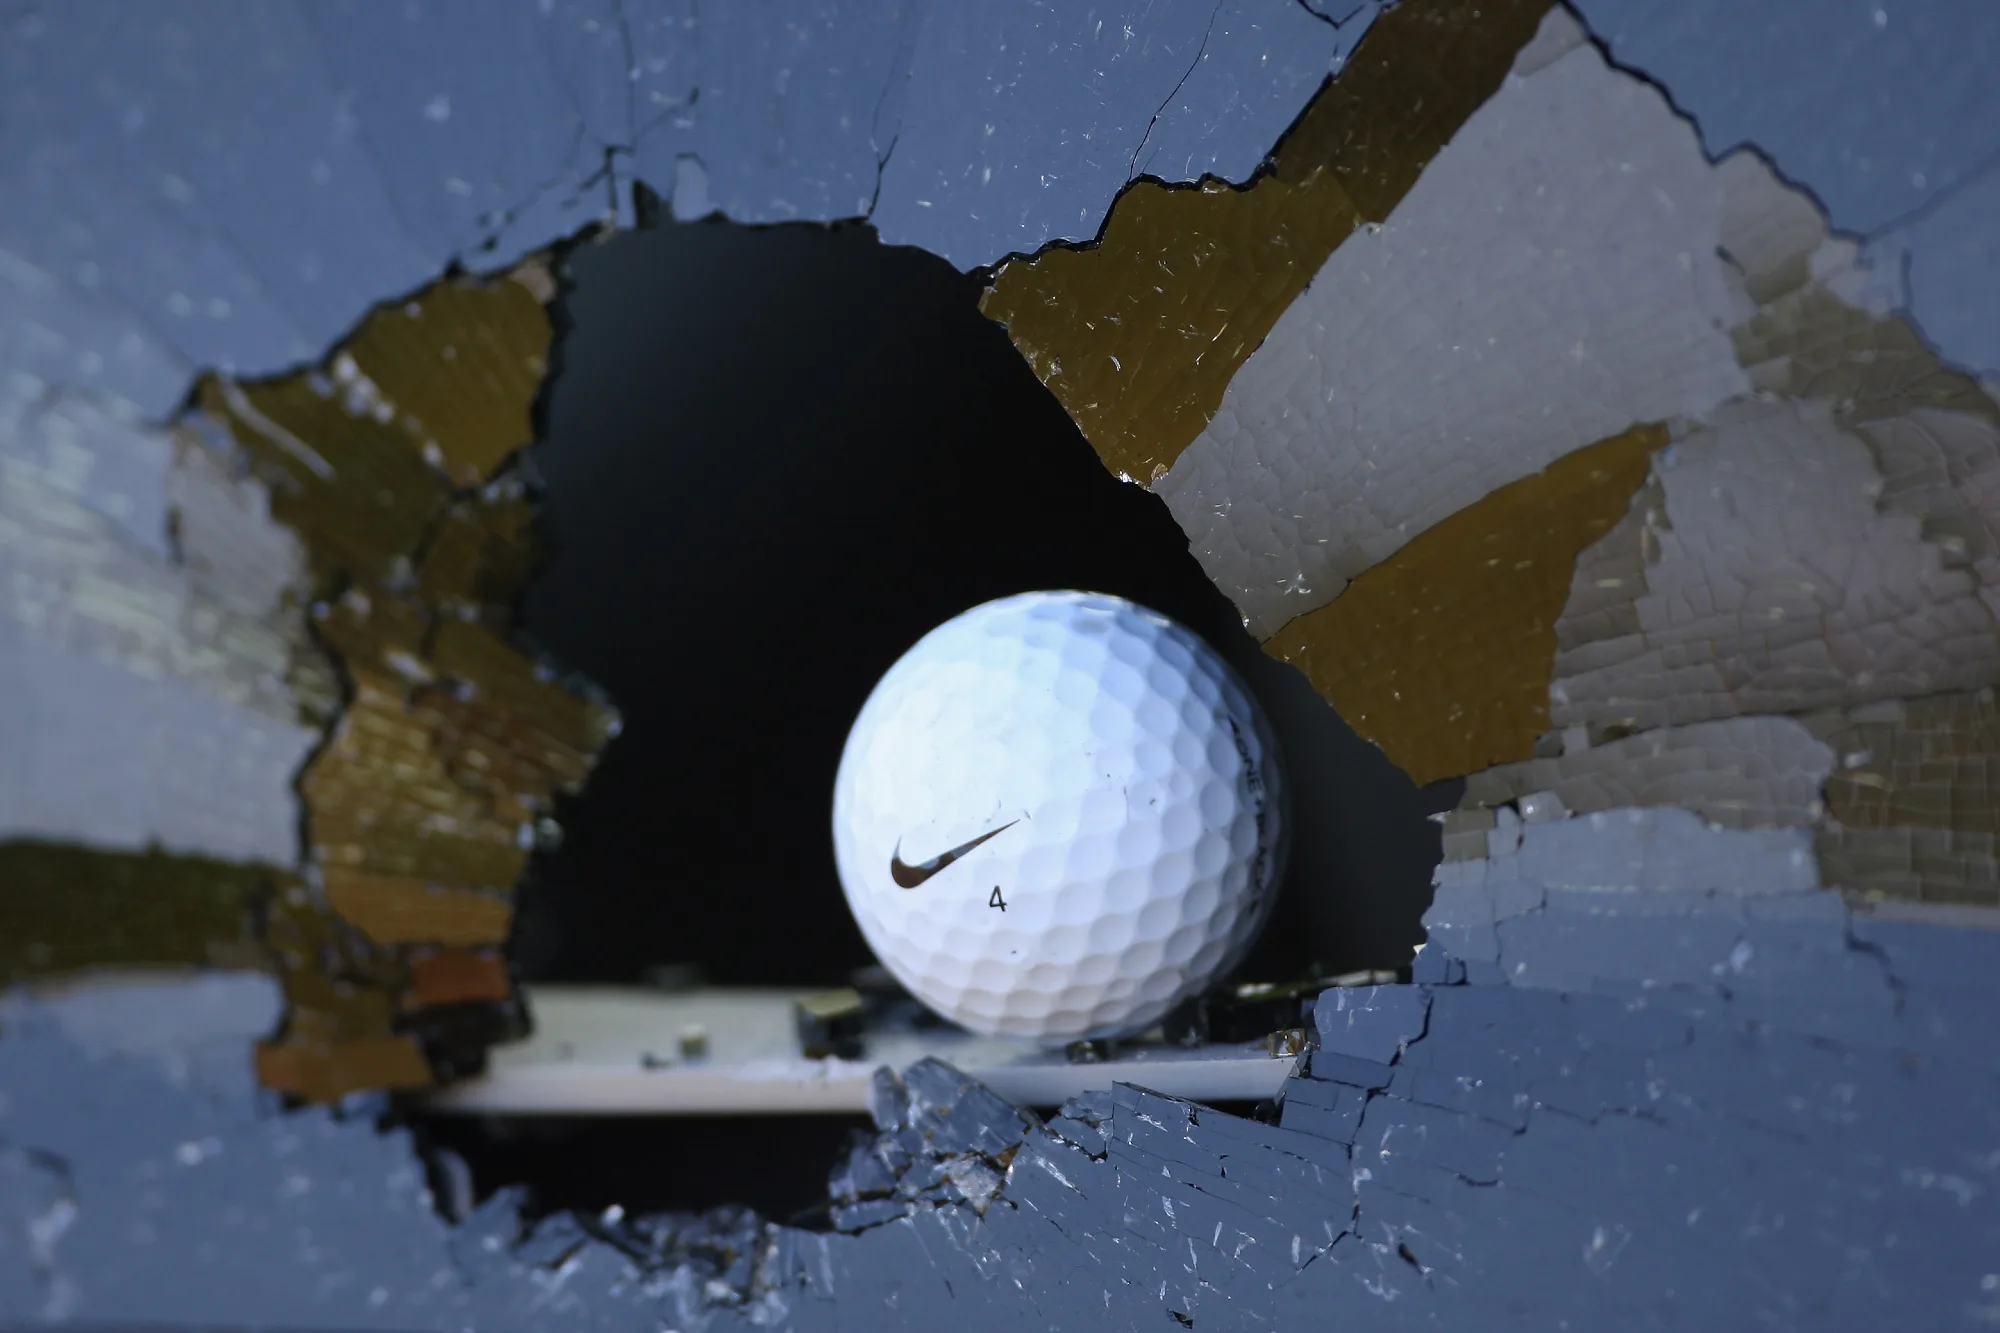 Golf ball smashed through window